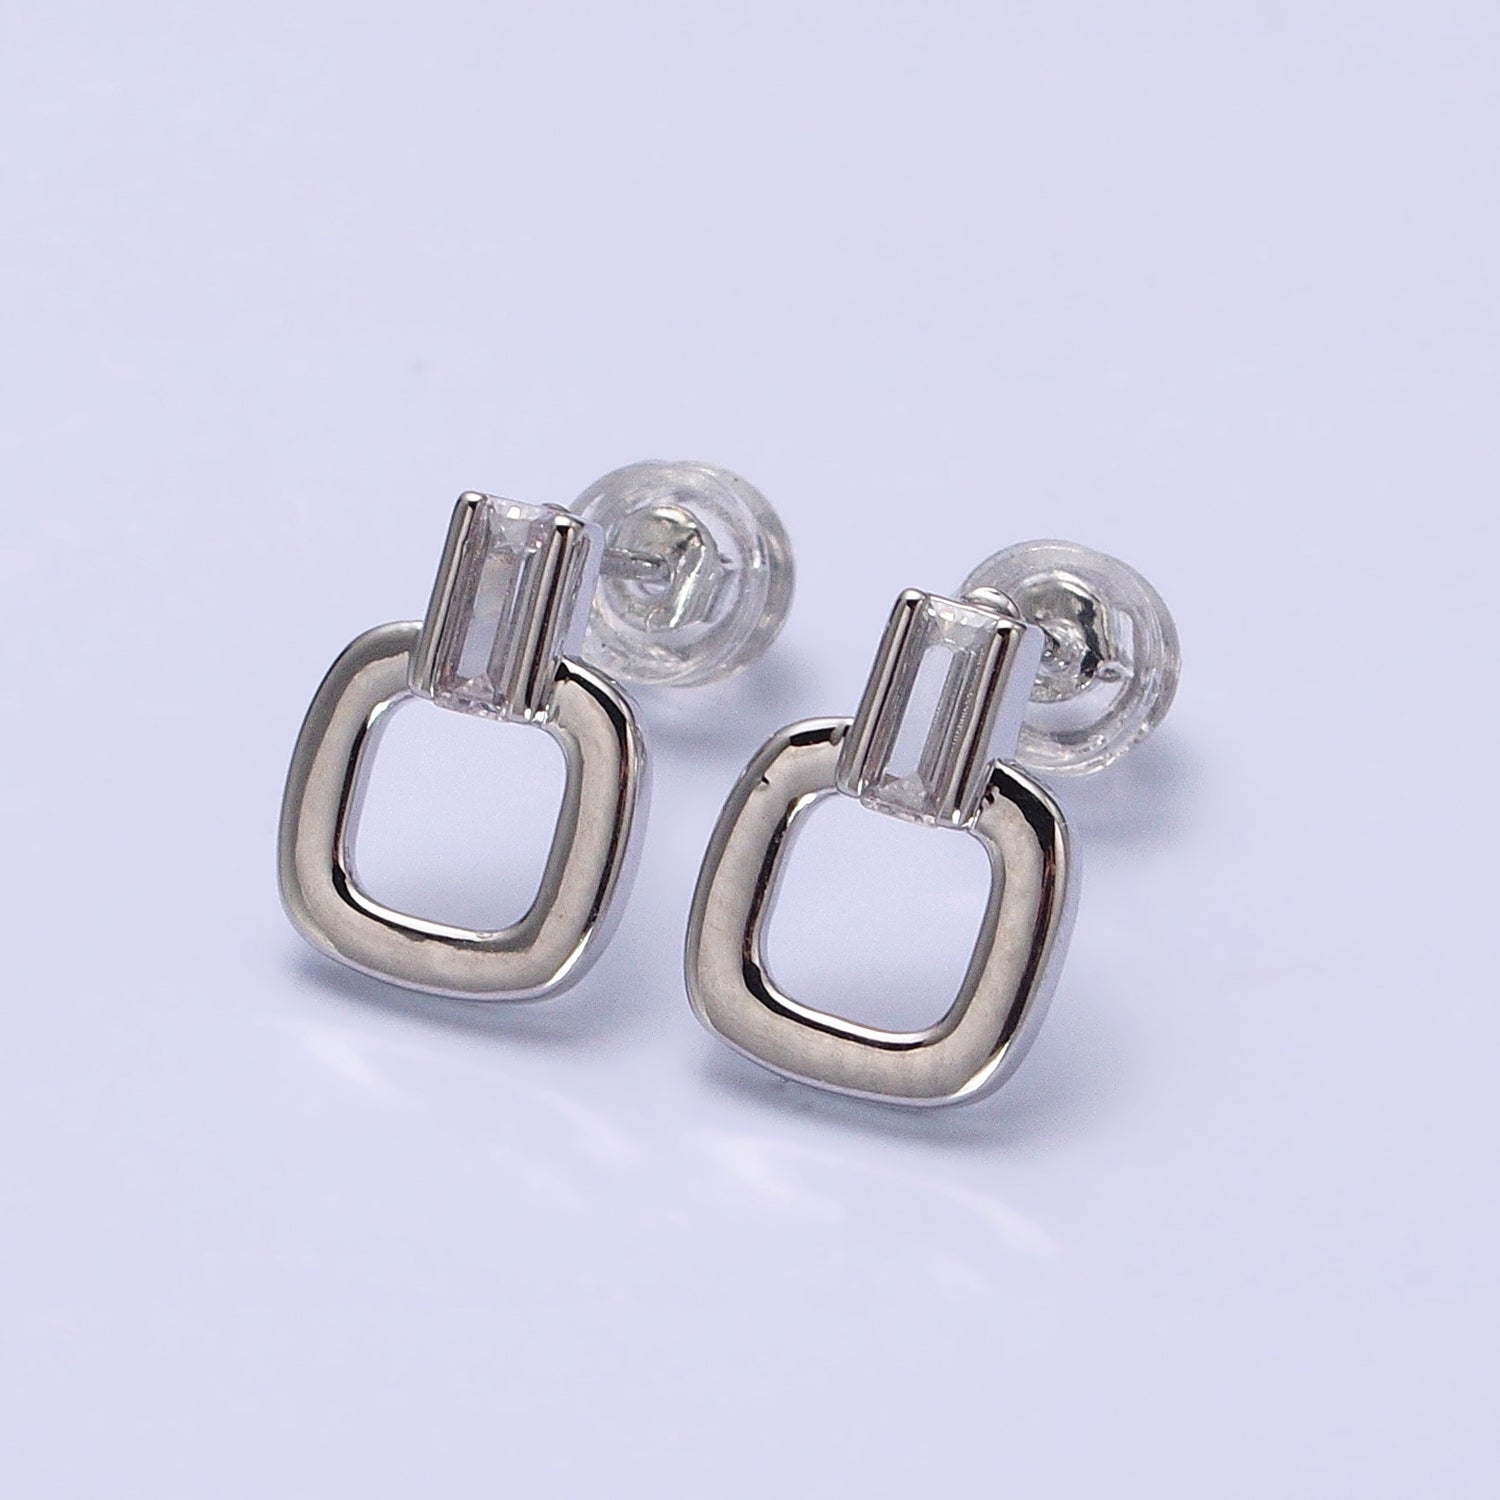 Minimalist Square Stud Earrings, Silver and Gold Modern Geometric Stud Earrings AB-641 AB-642